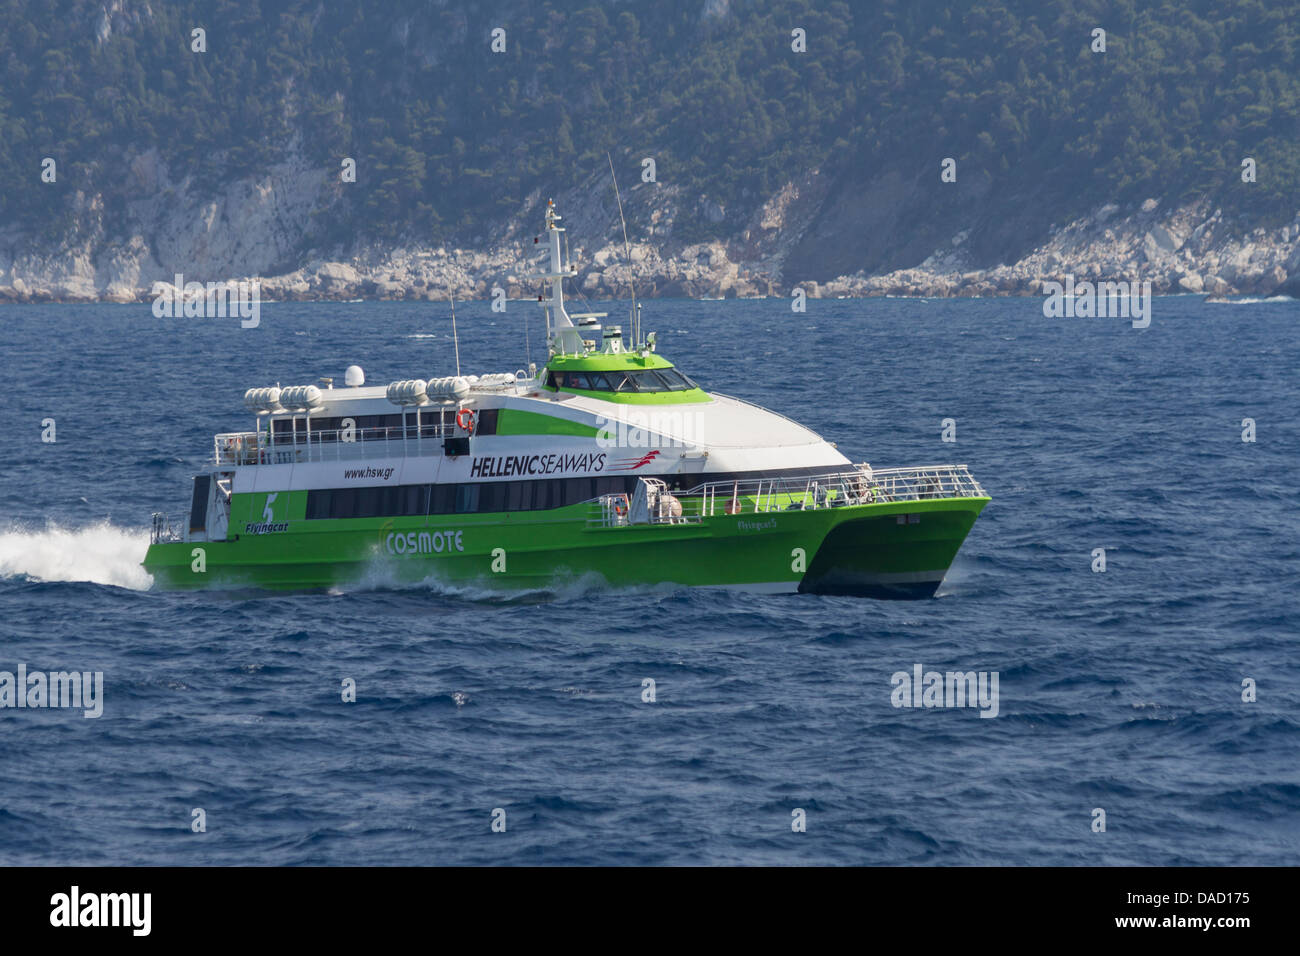 Greece Sporades, Hellenic Seaways fast ferry Stock Photo